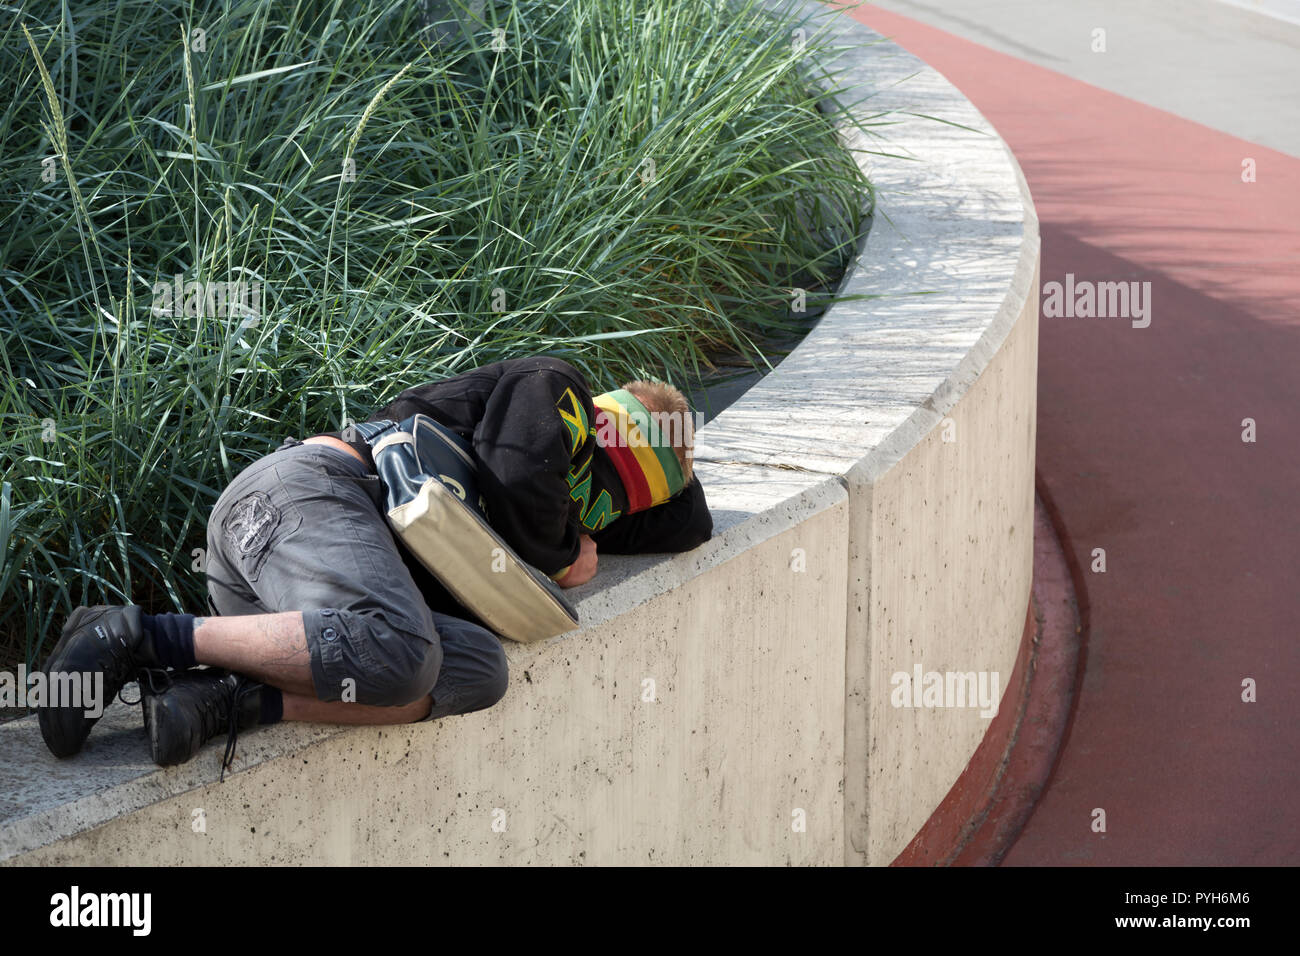 Poznan, Wielkopolska, Poland - Alcoholic homeless person sleeps out his intoxication Stock Photo